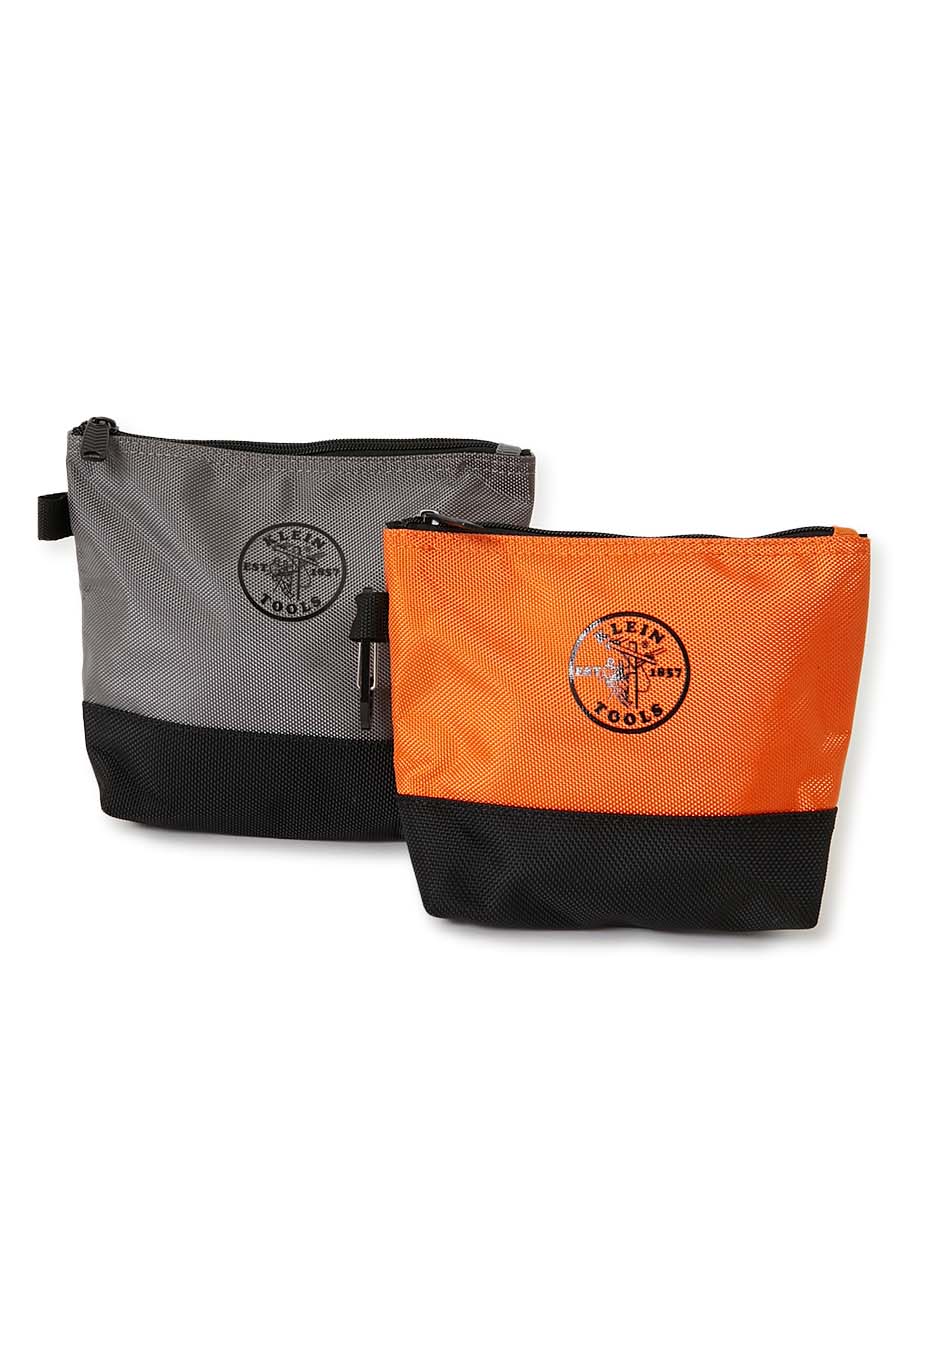 KLEIN TOOLS Standup Zipper Bag 2-Pack